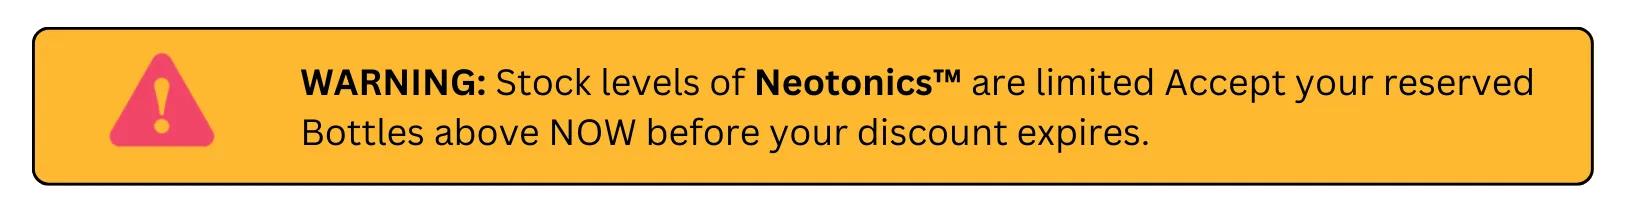 Neotonics Limited Stock Warning